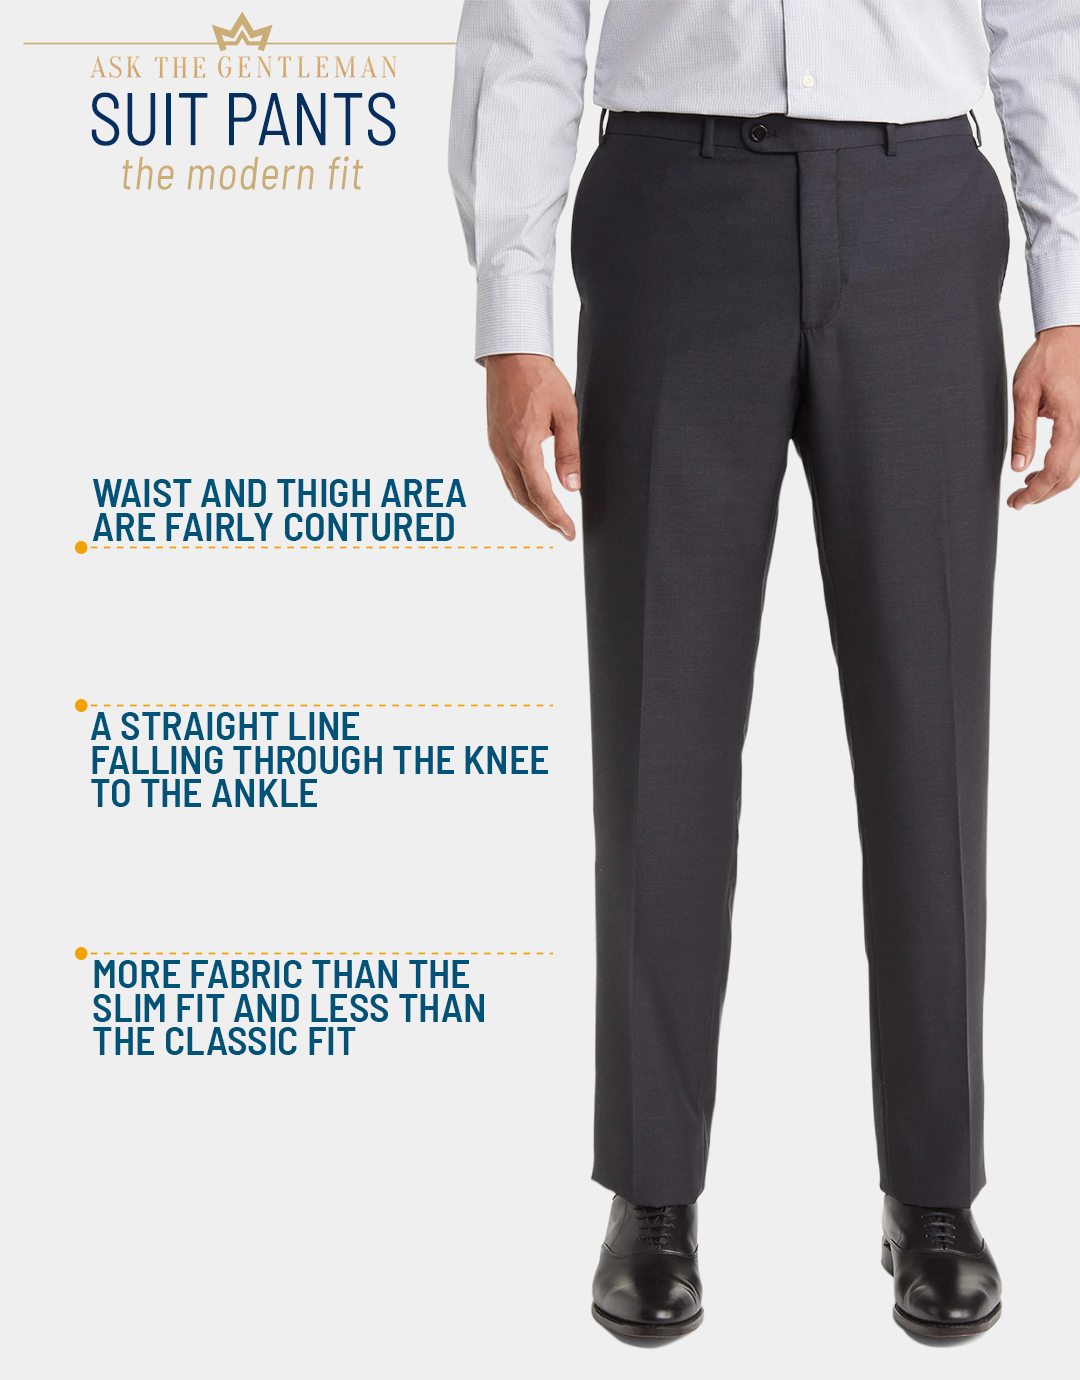 What is a modern fit suit pant cut